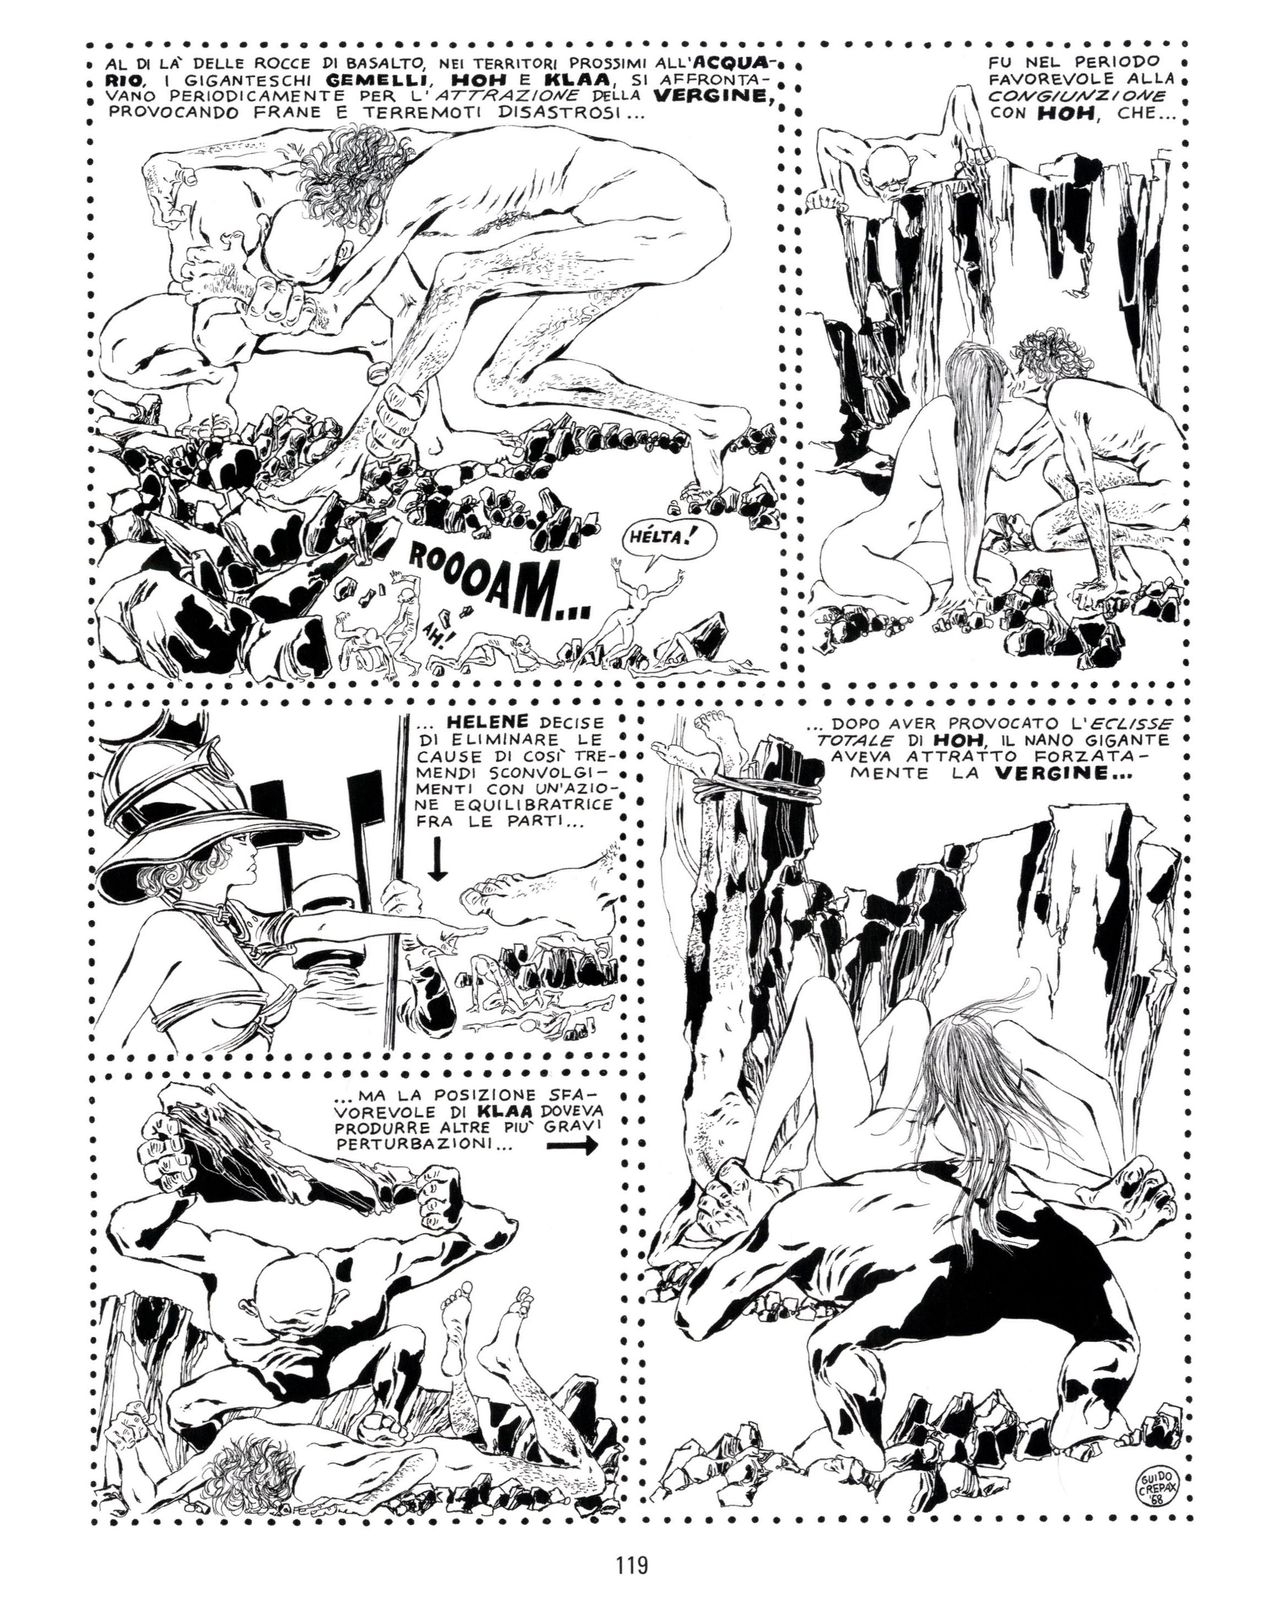 [Guido Crepax] Erotica Fumetti #25 : L'ascesa dei sotterranei : I cavalieri ciechi [Italian] 120